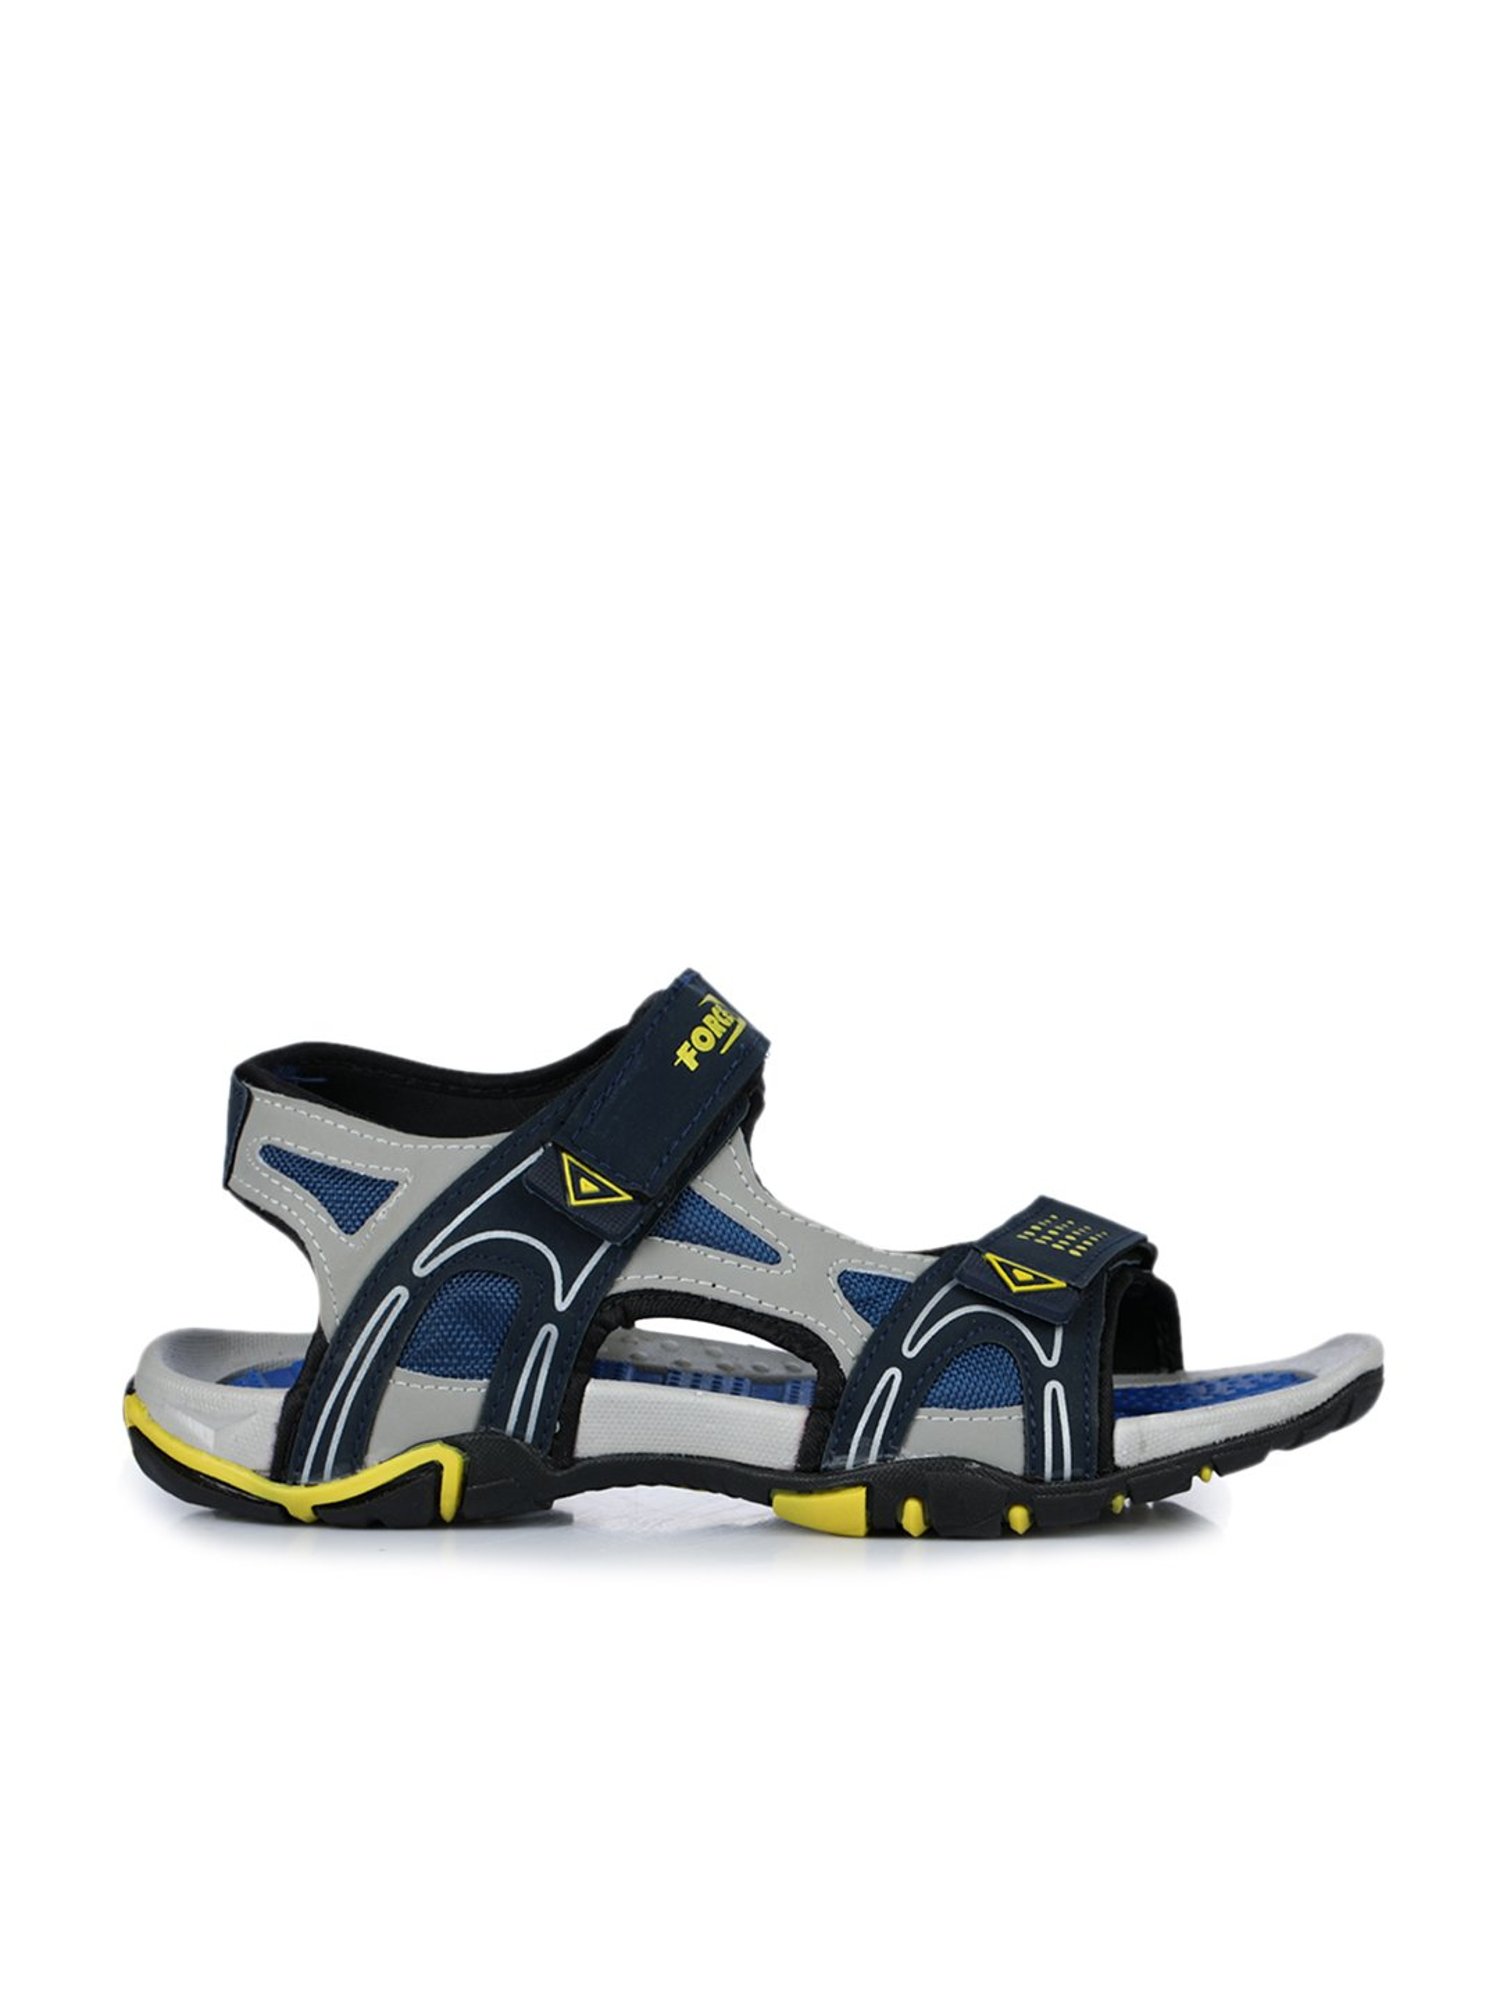 Buy Reebok Nitro Navy Swimming Sandals Online